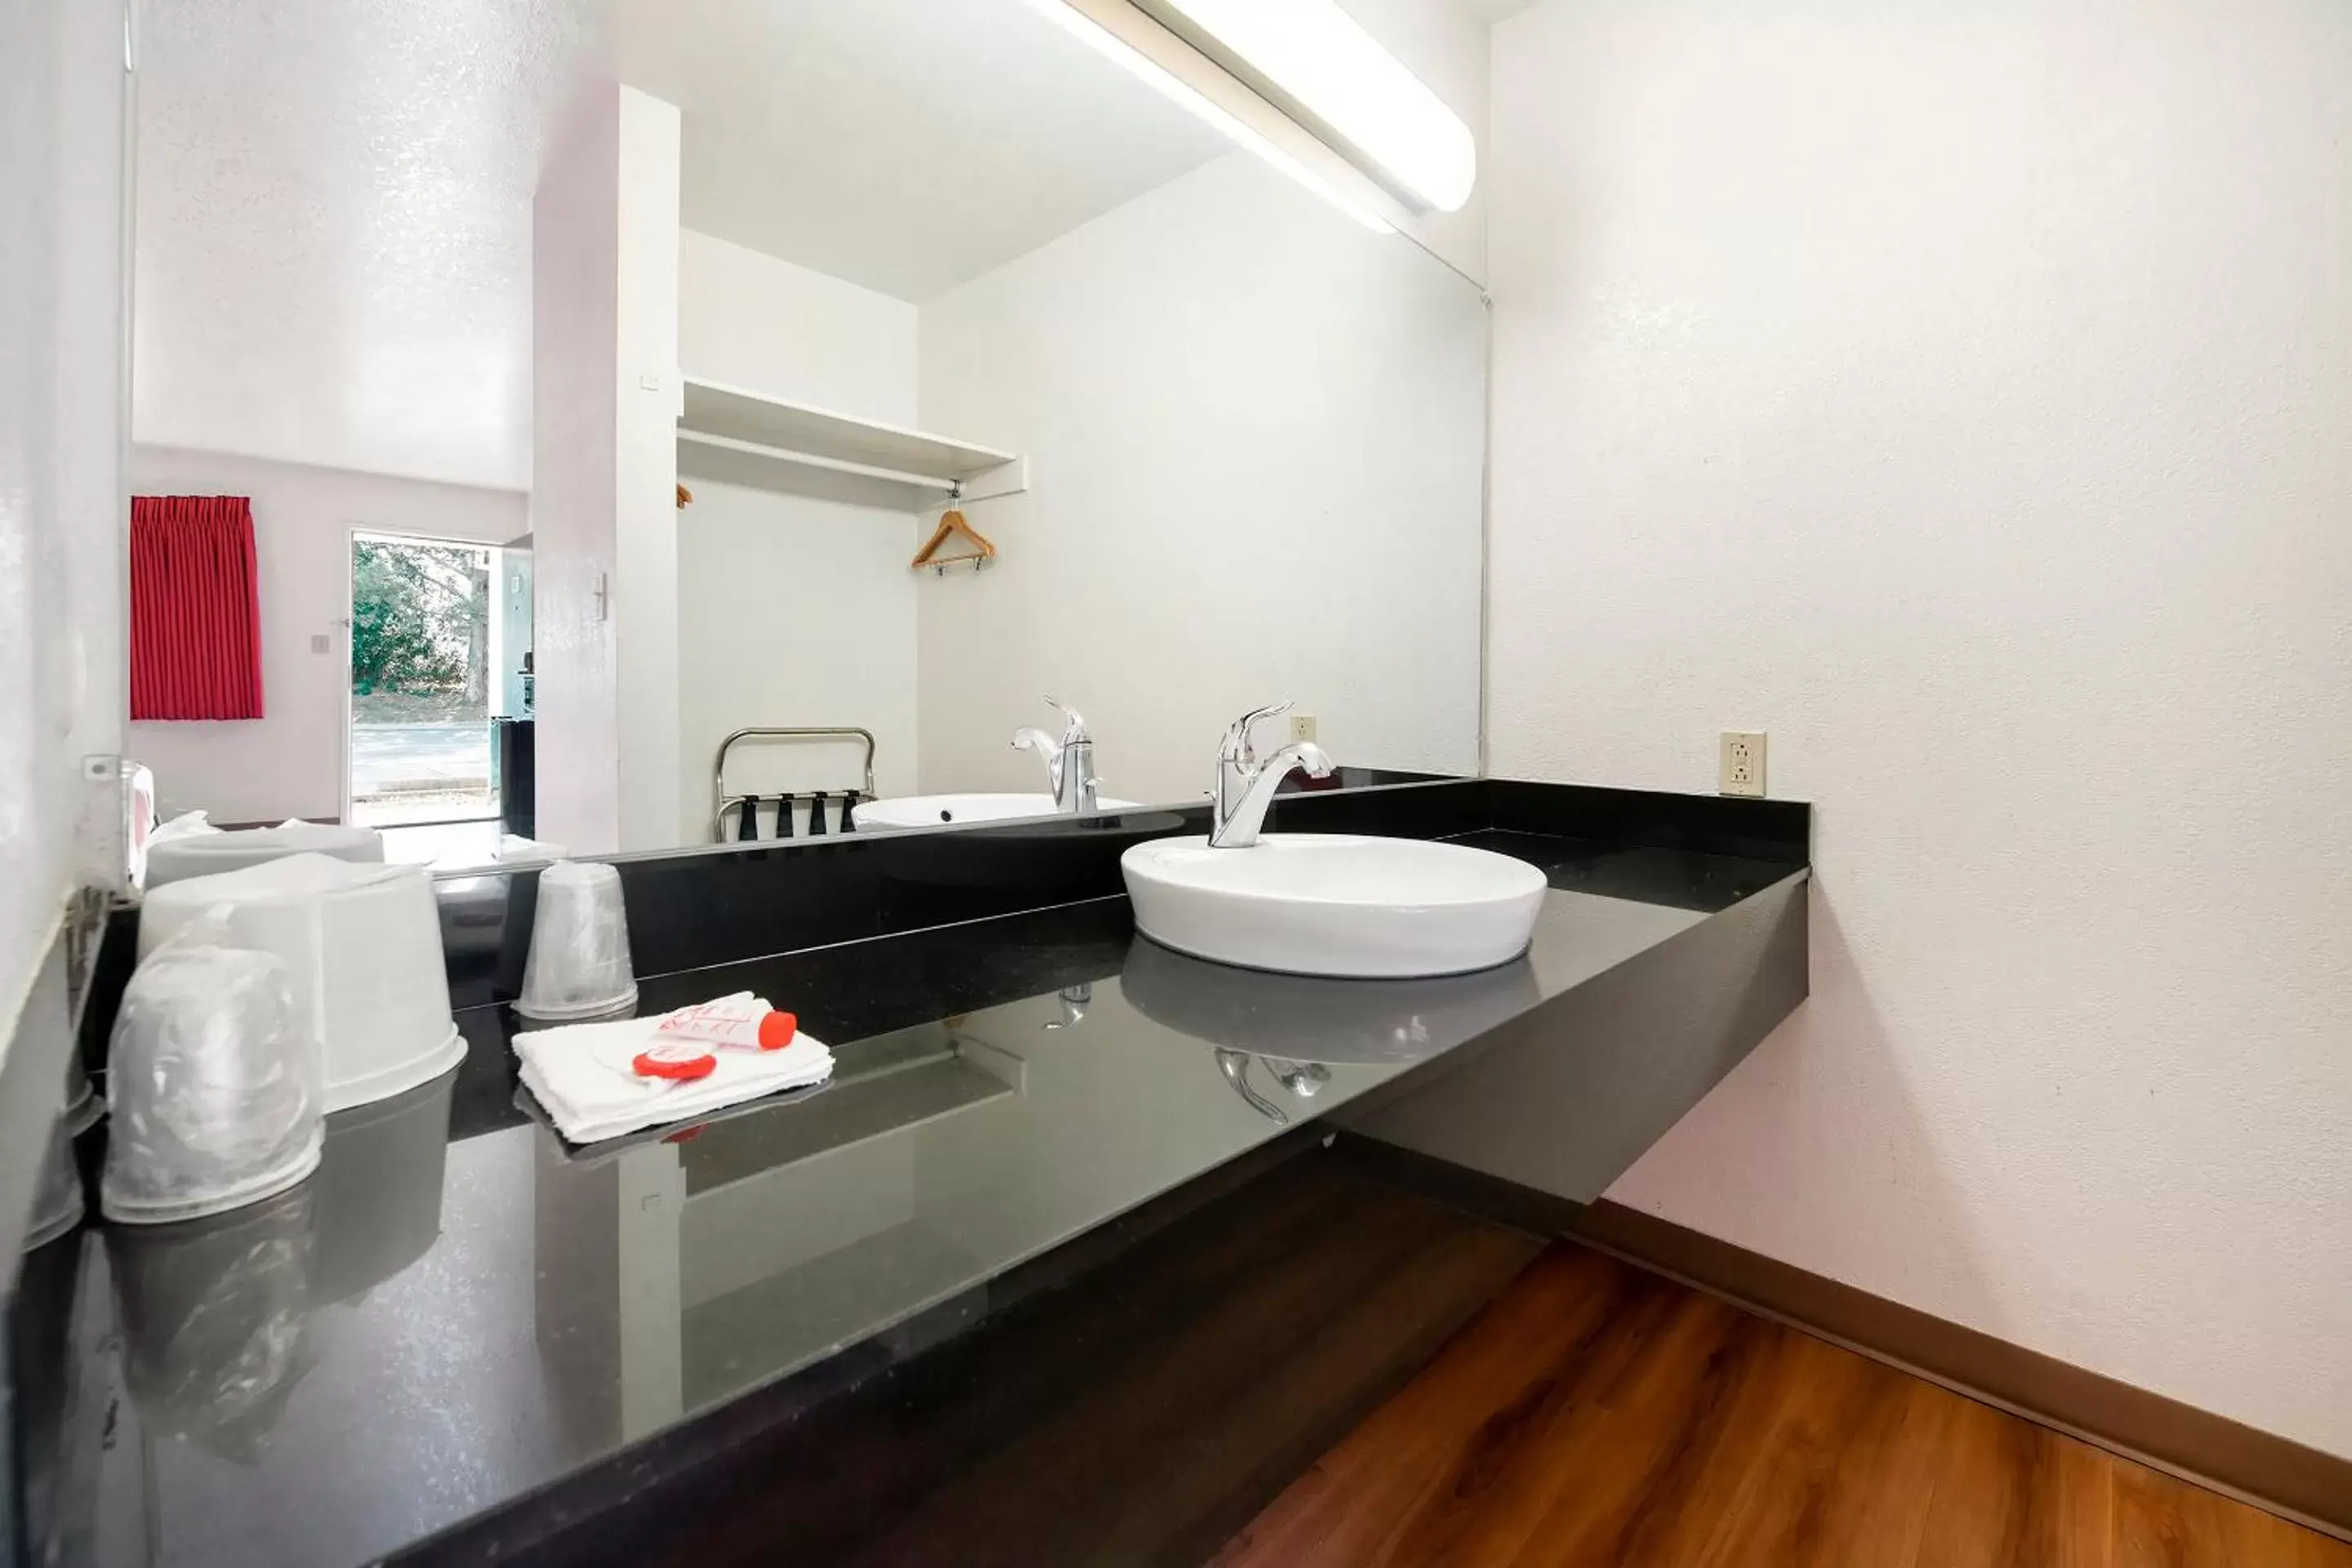 Area and facilities, Bathroom in Super 8 by Wyndham Dunnigan